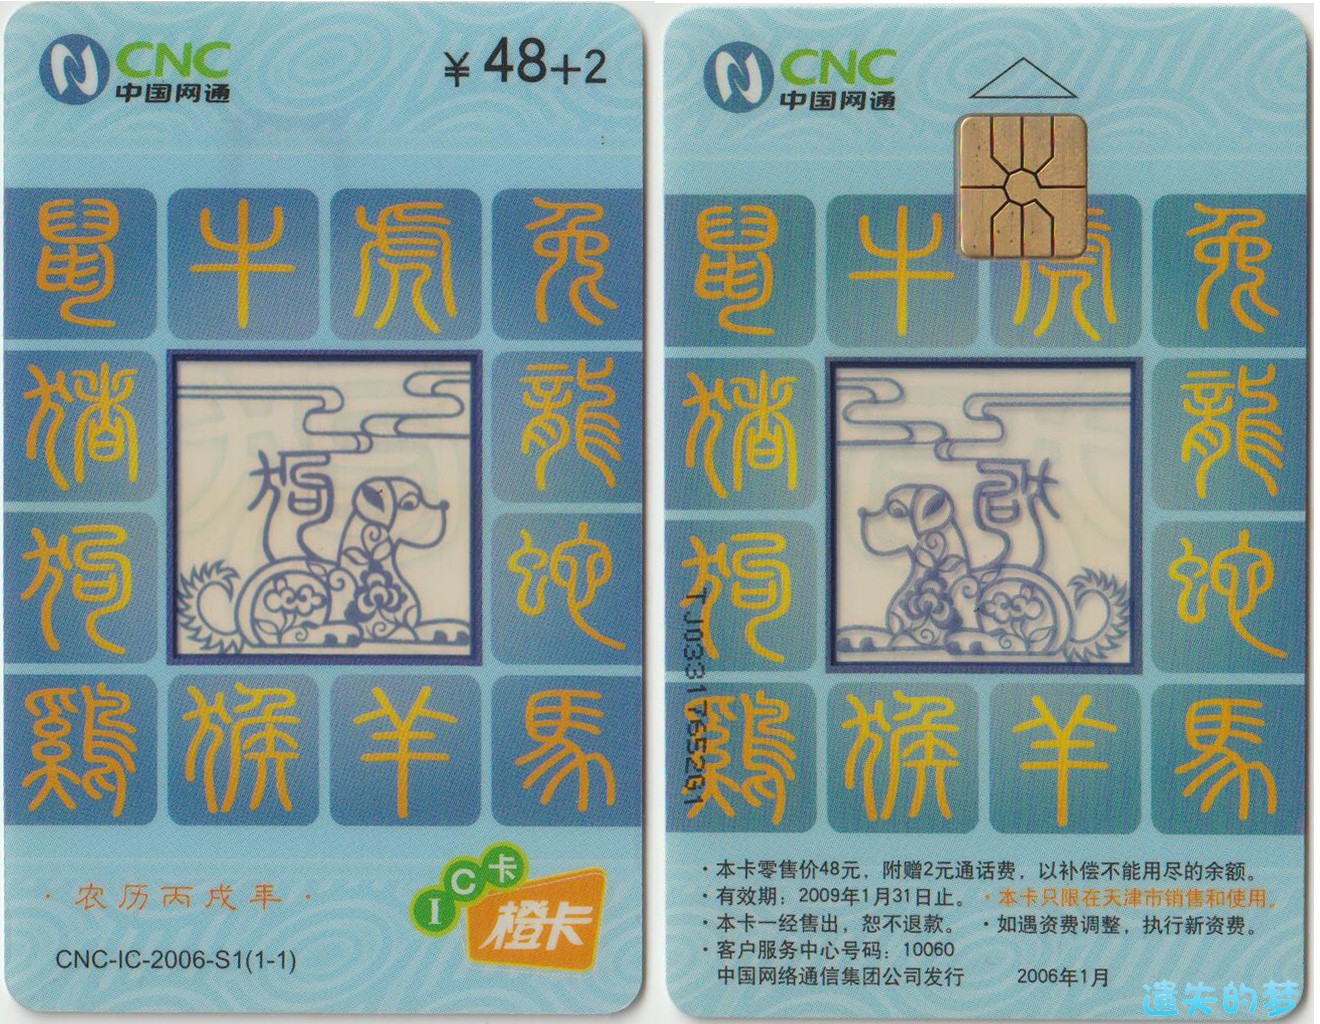 CNC-IC-2006-S1(1-1).jpg